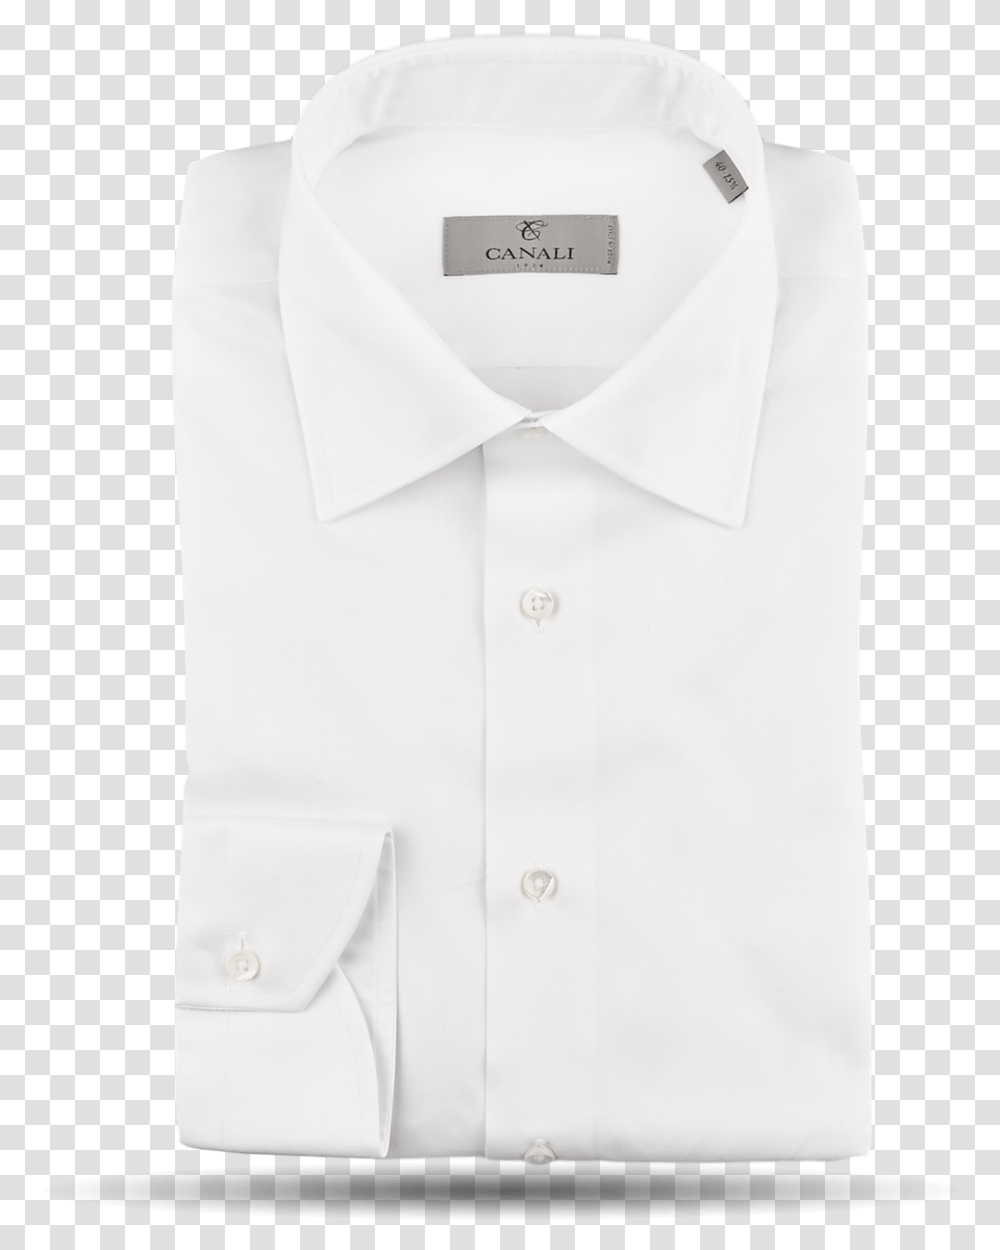 Button, Apparel, Shirt, Dress Shirt Transparent Png